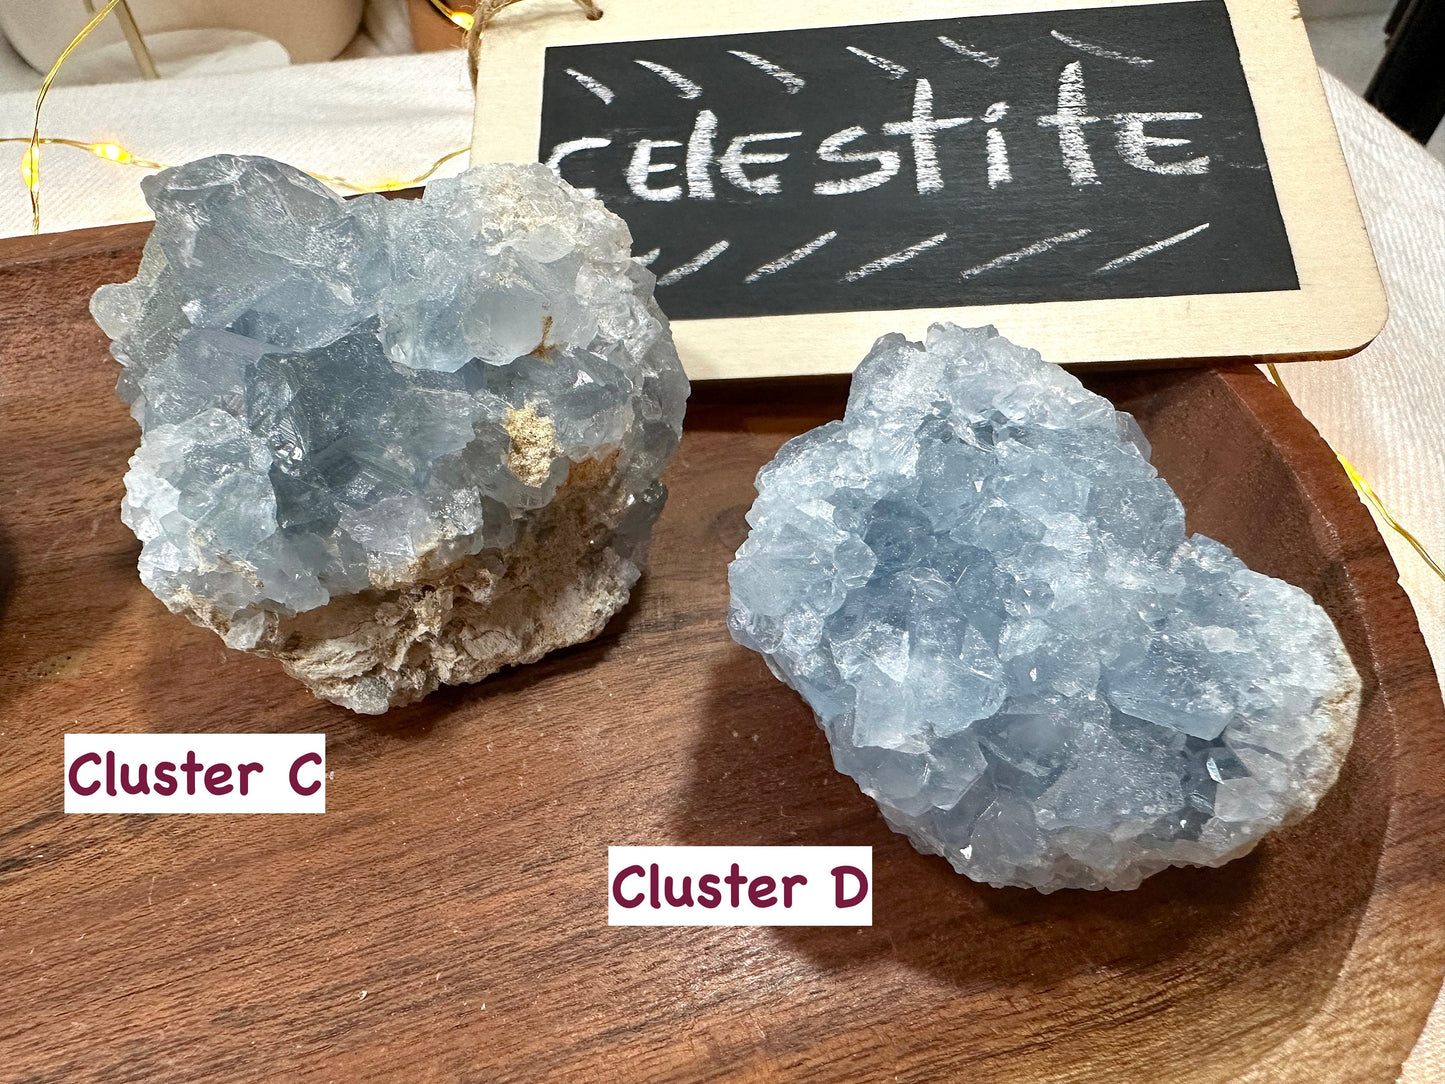 Celestite Cluster, geode